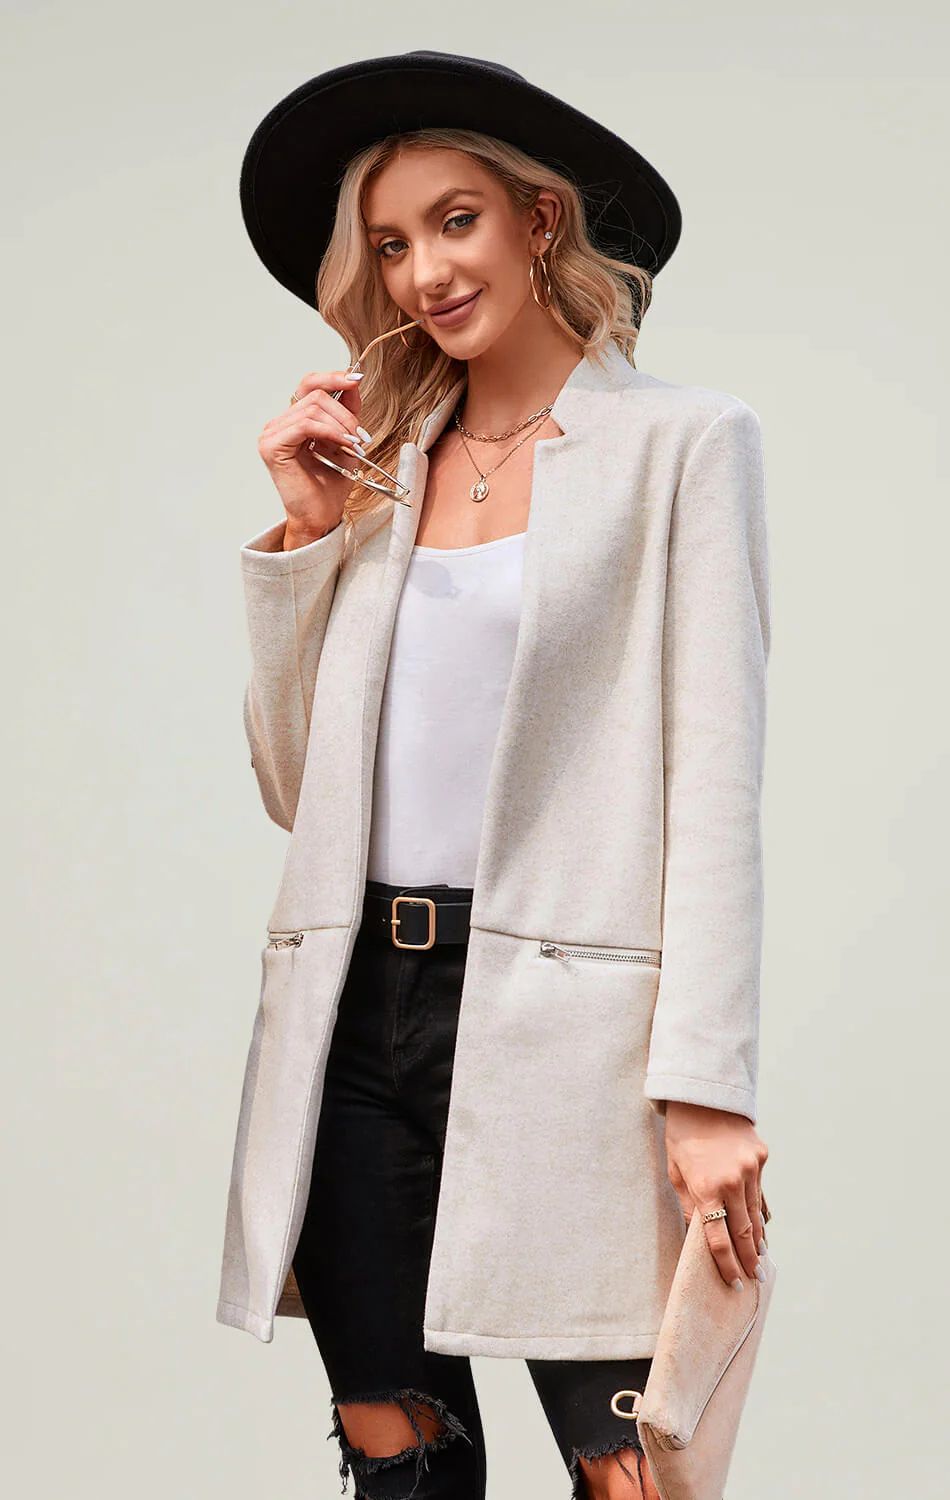 Women's Cardigan Coat - Stylish and Warm Outerwear - Angashion | Angashion Fashion Trends